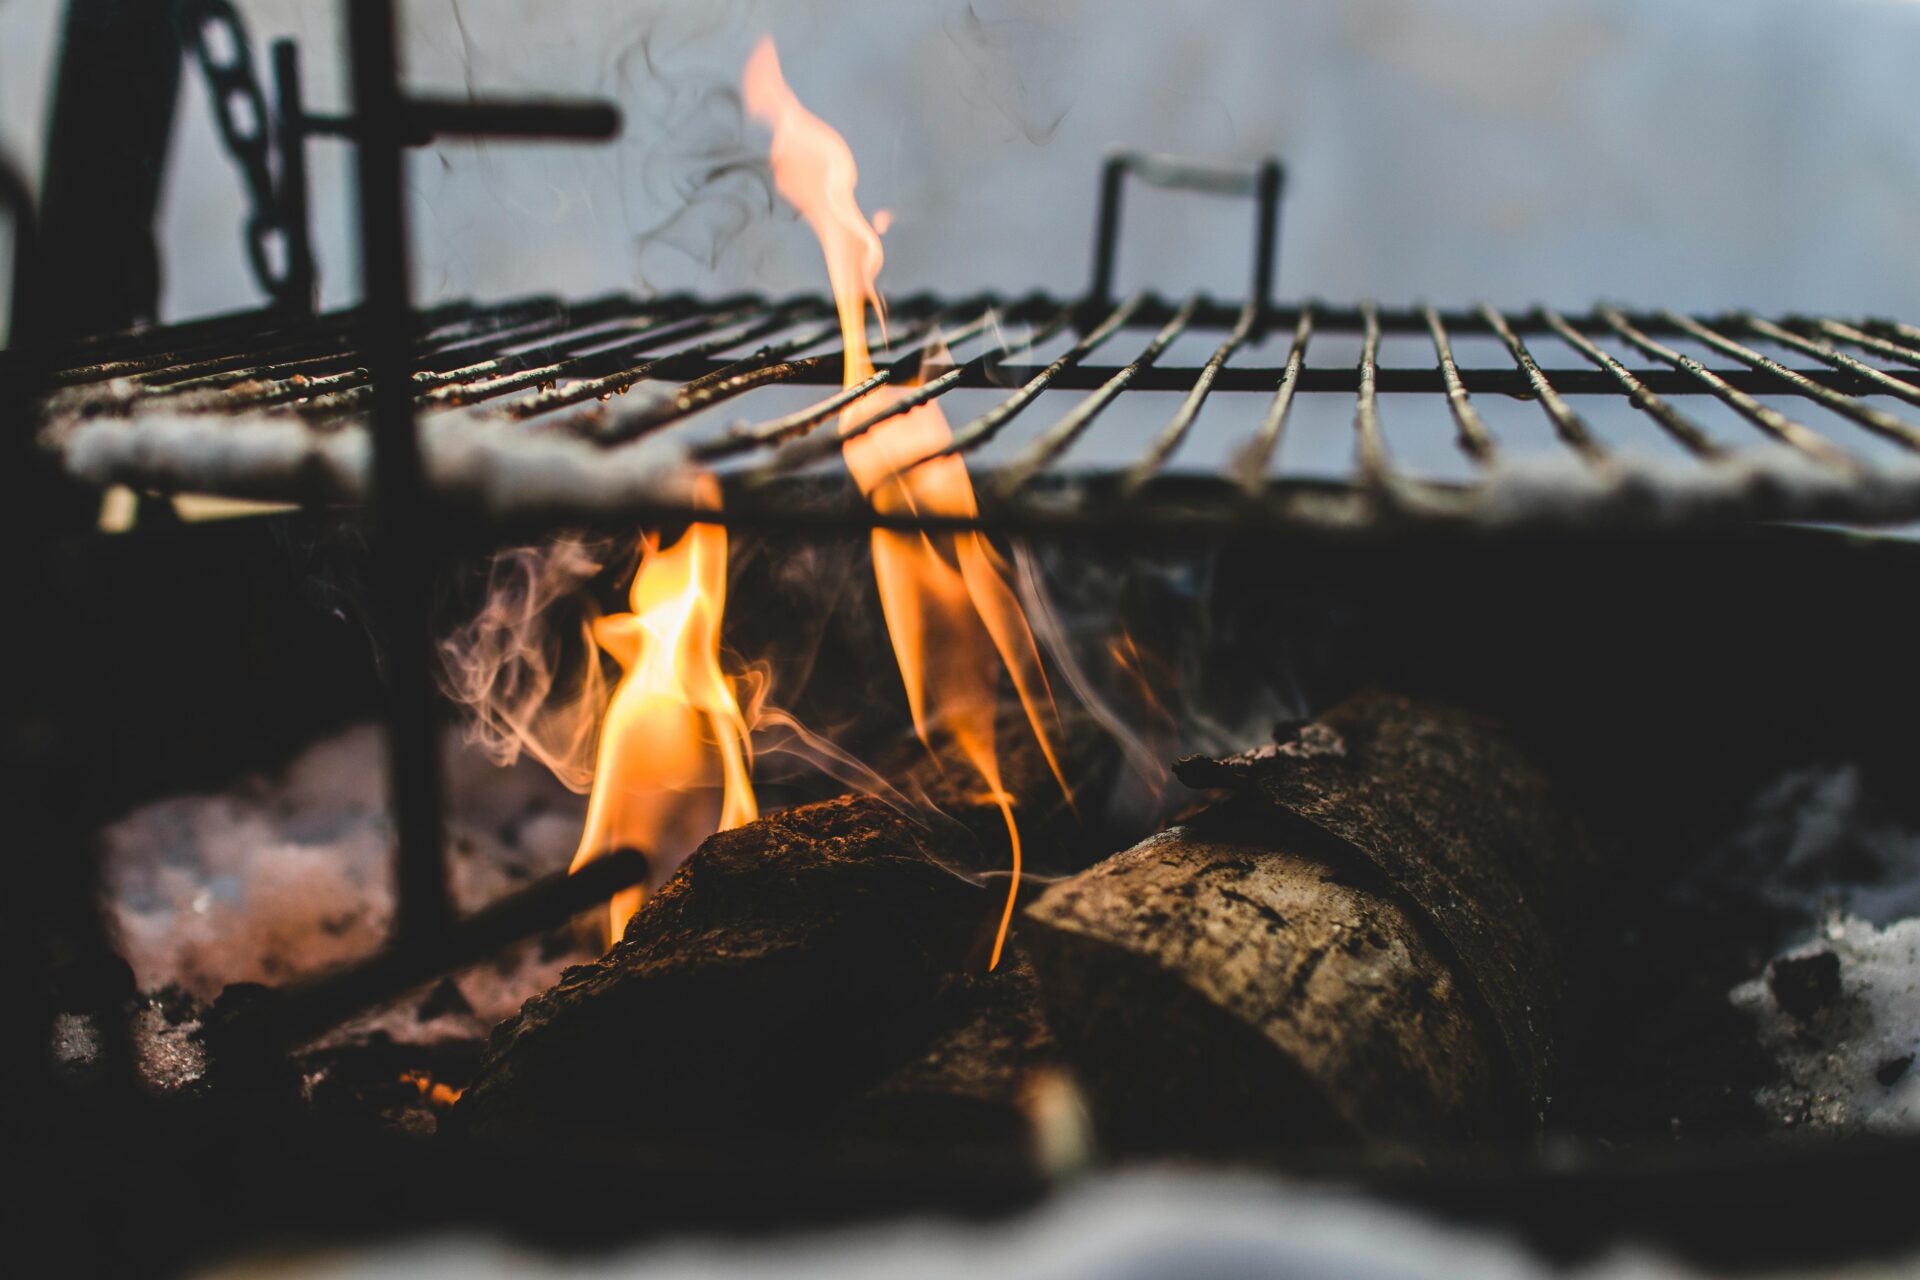 Fire on a bbq grill.